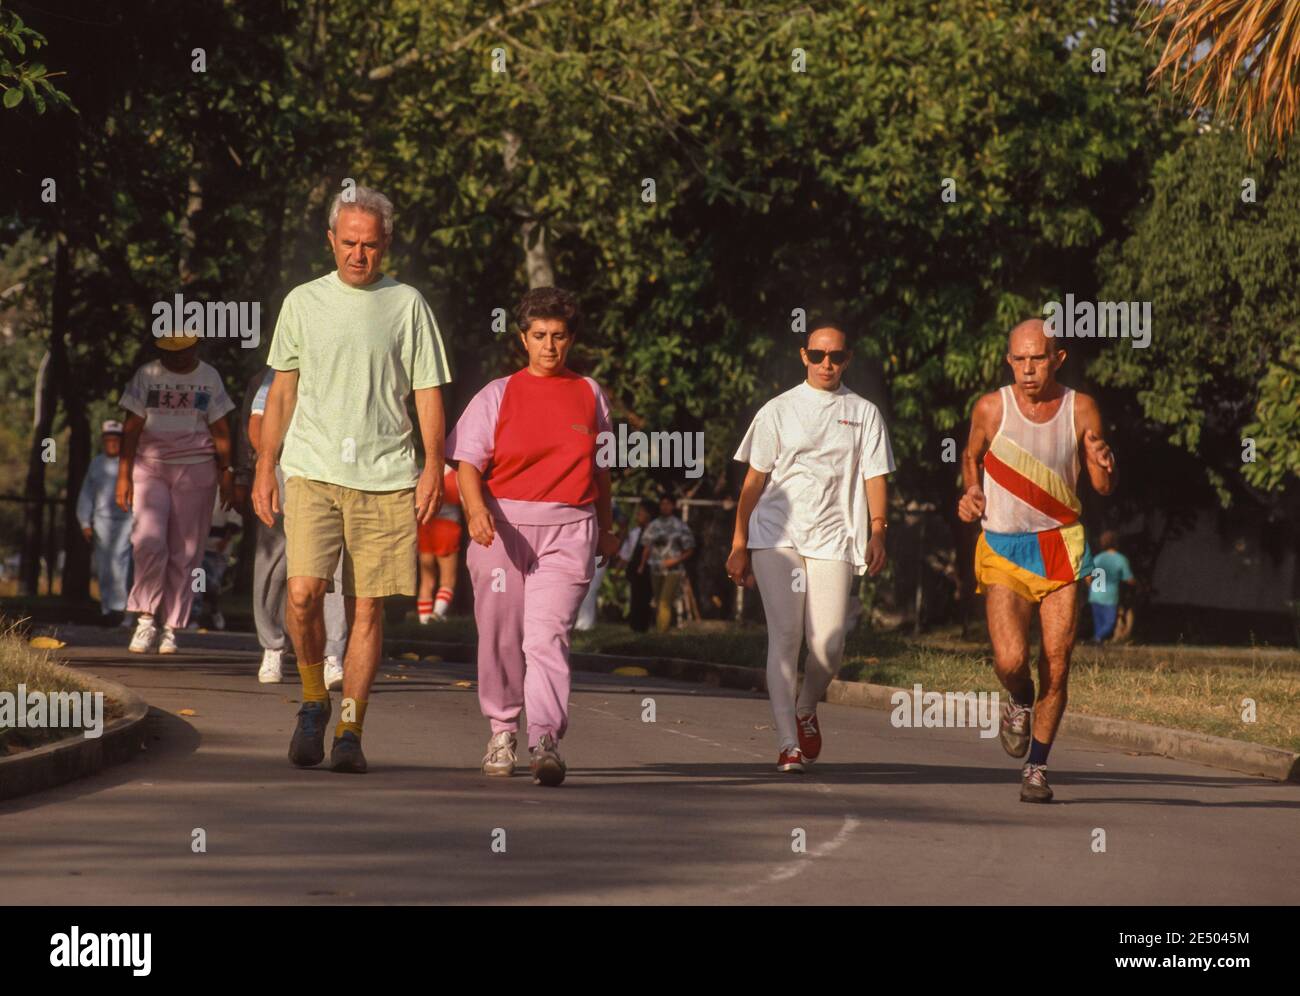 CARACAS, VENEZUELA, OCTOBER 1992 - People walking for exercise and jogging in Parque del Este. Stock Photo